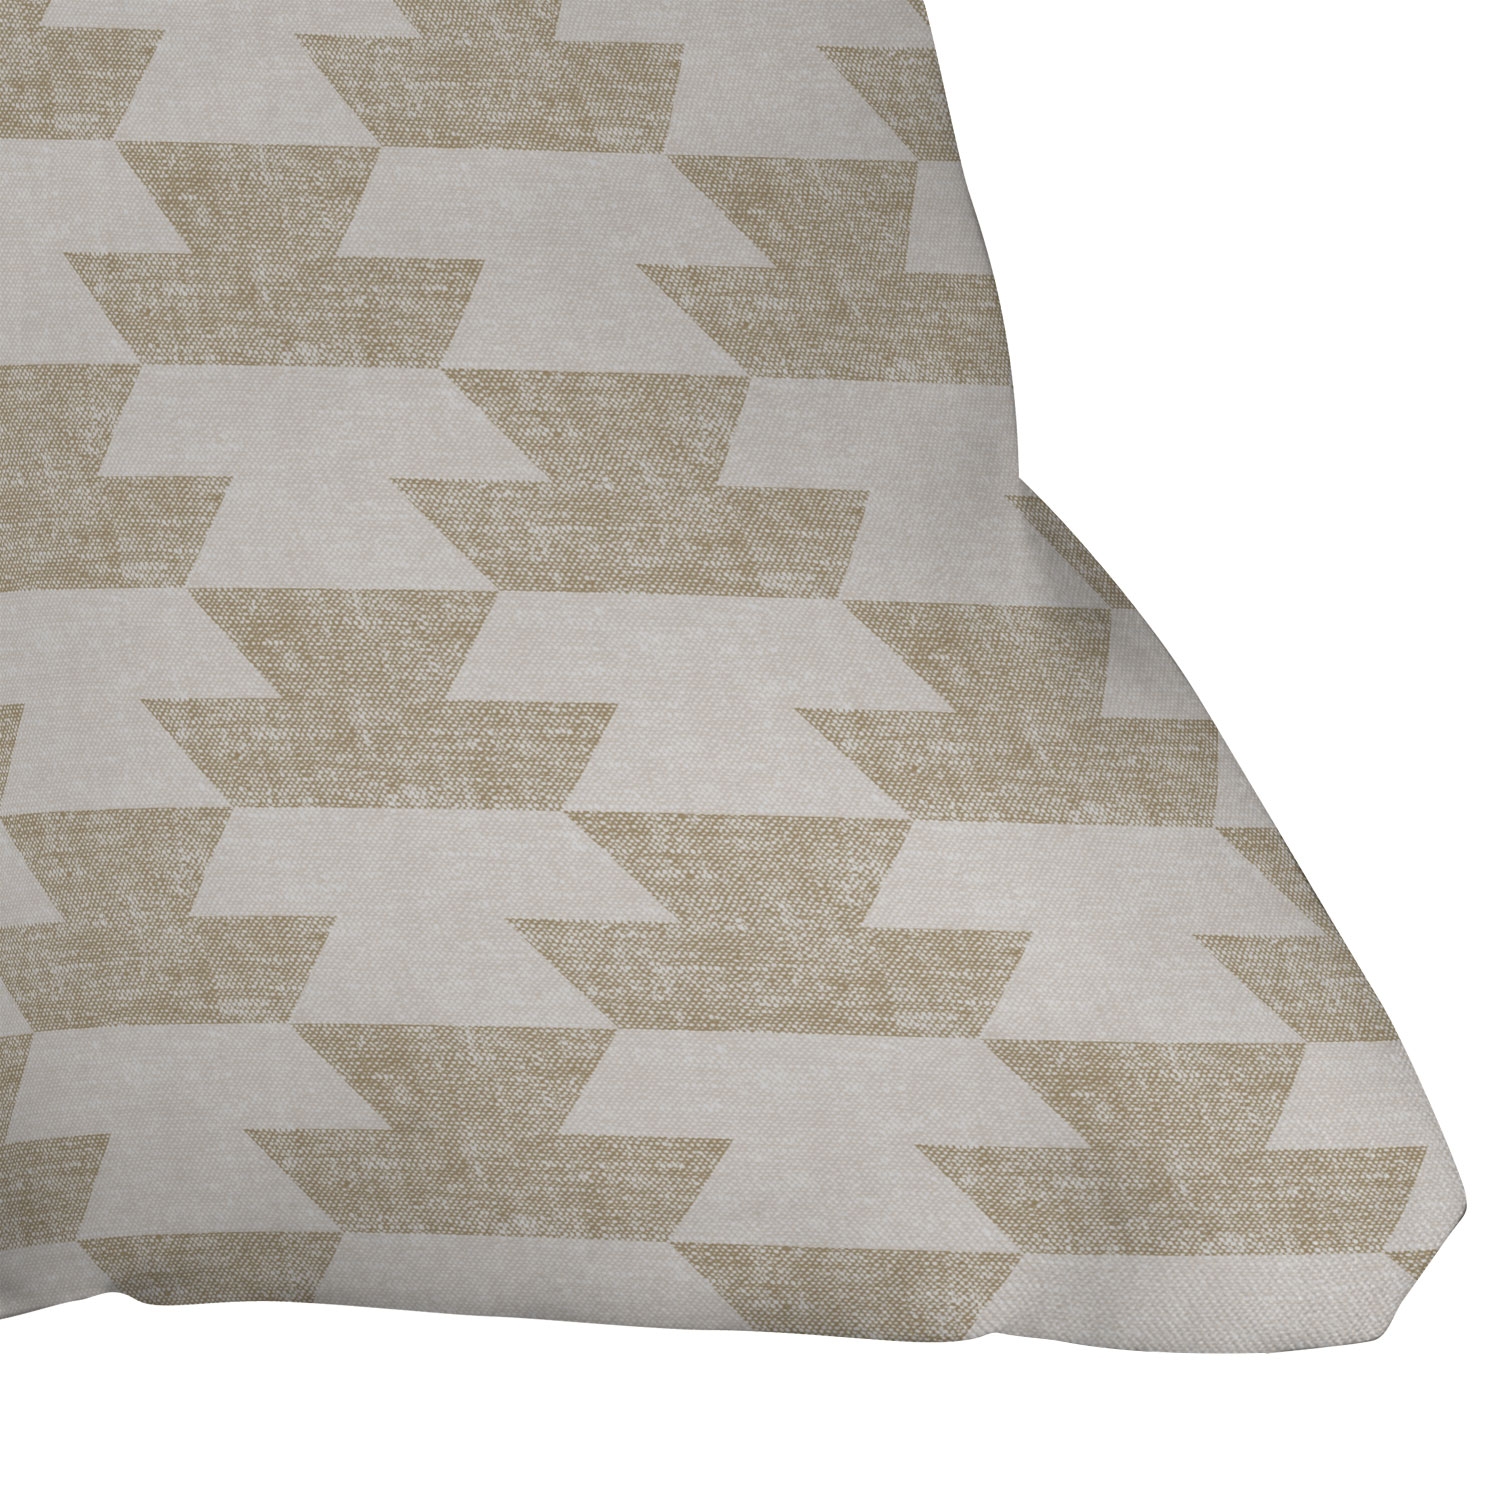 Boho Geometric Aztec by Little Arrow Design Co - Outdoor Throw Pillow 16" x 16" - Image 1